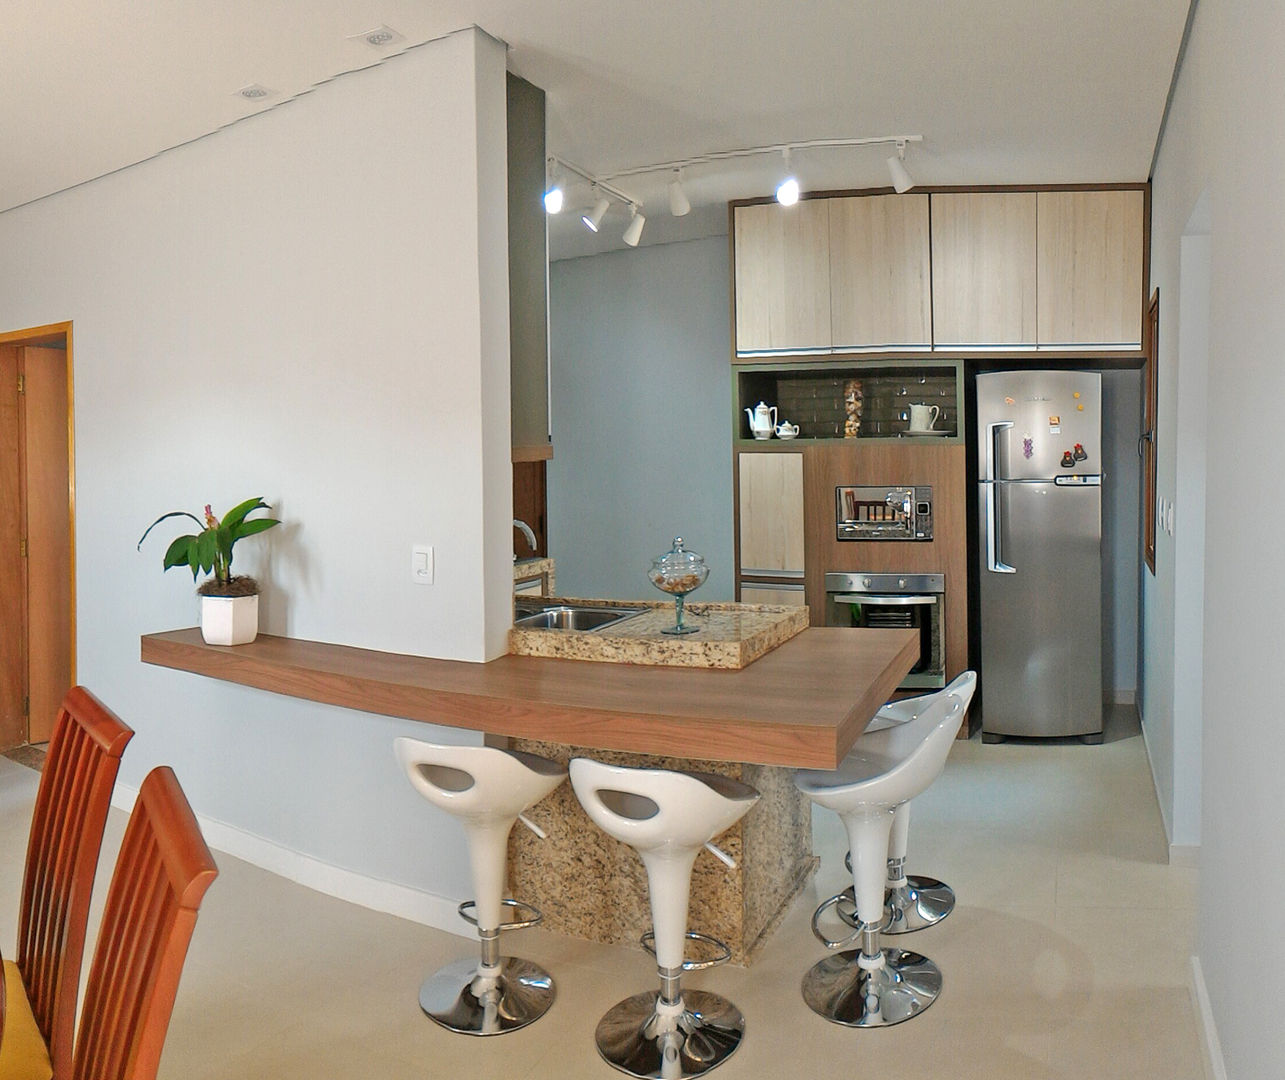 Residência ACJ , Nailê Rabelo - arquitetura e design Nailê Rabelo - arquitetura e design Modern kitchen